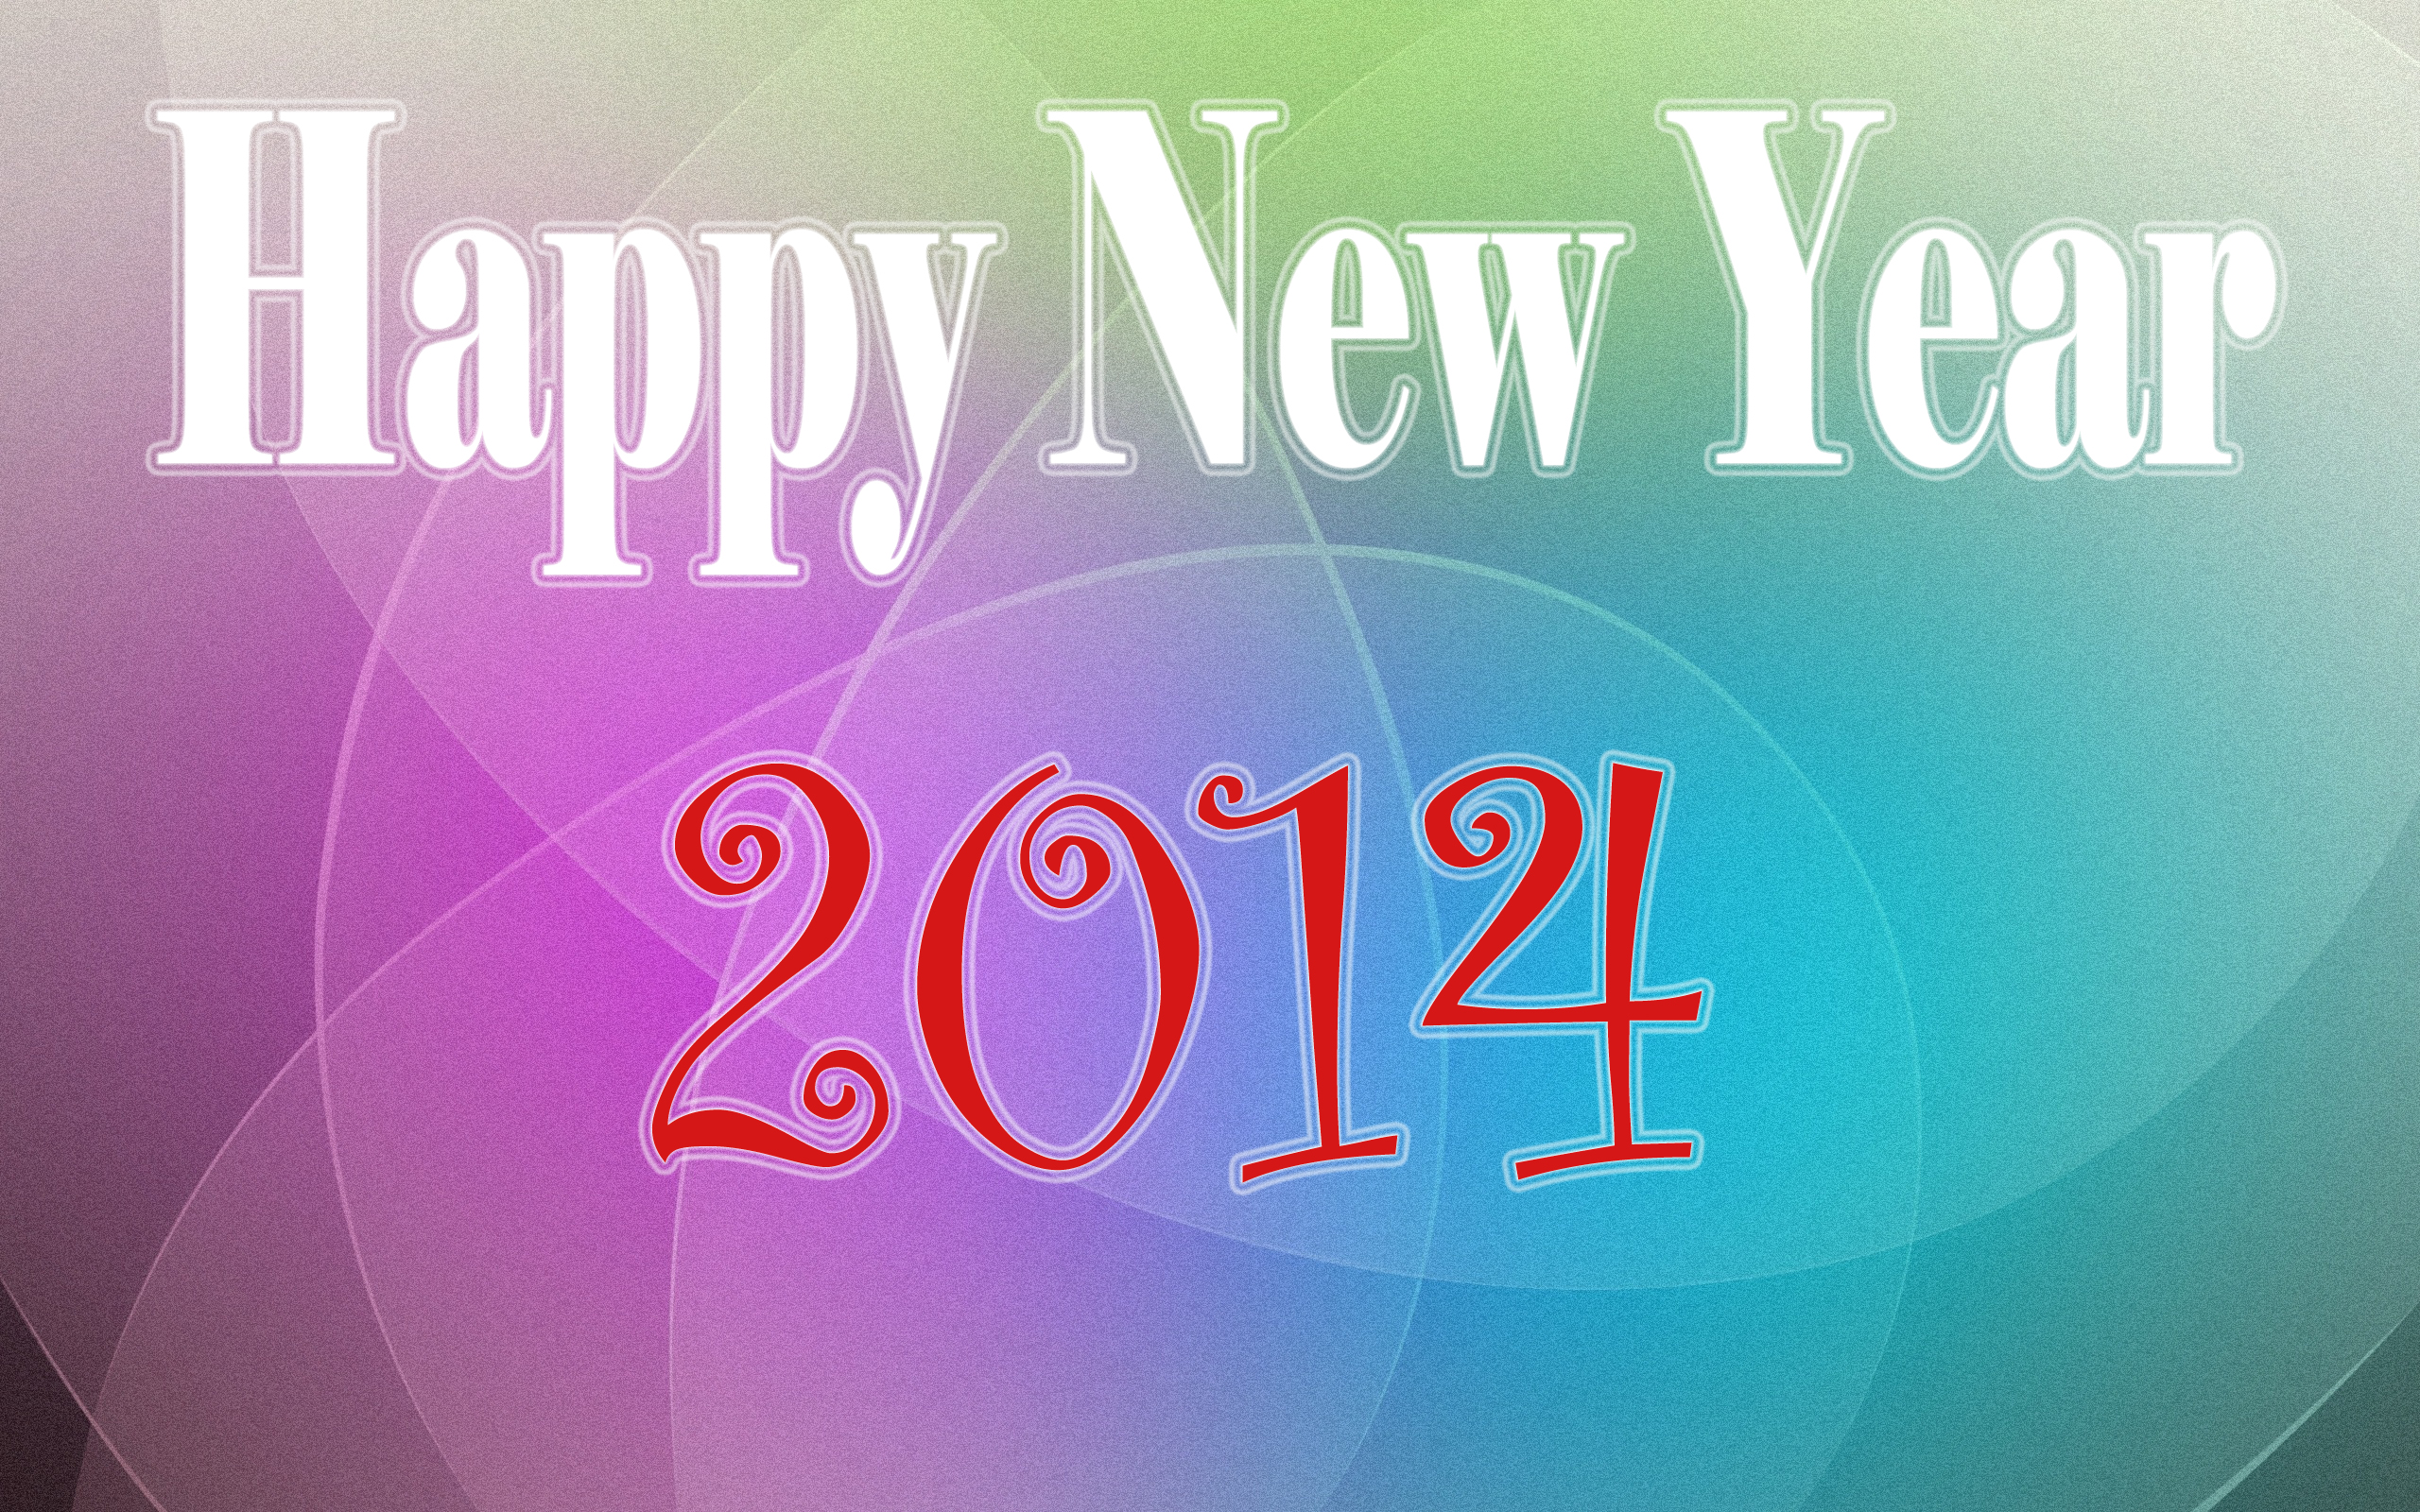 holiday, new year 2014